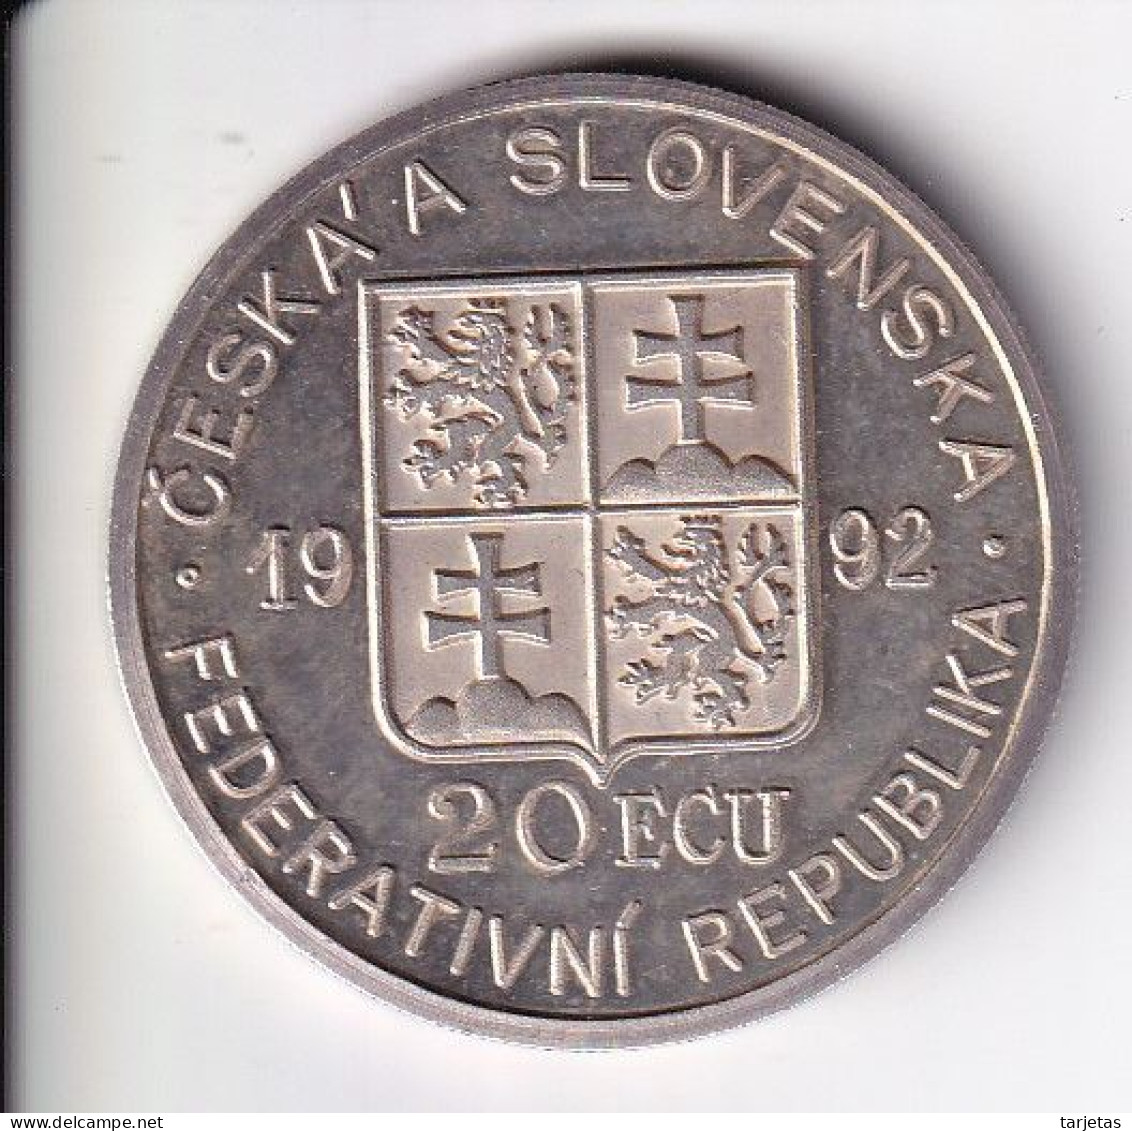 MONEDA DE PLATA DE CHECOSLOVAQUIA DE 20 ECU DEL AÑO 1992 (SILVER-ARGENT) RARA - Czechoslovakia